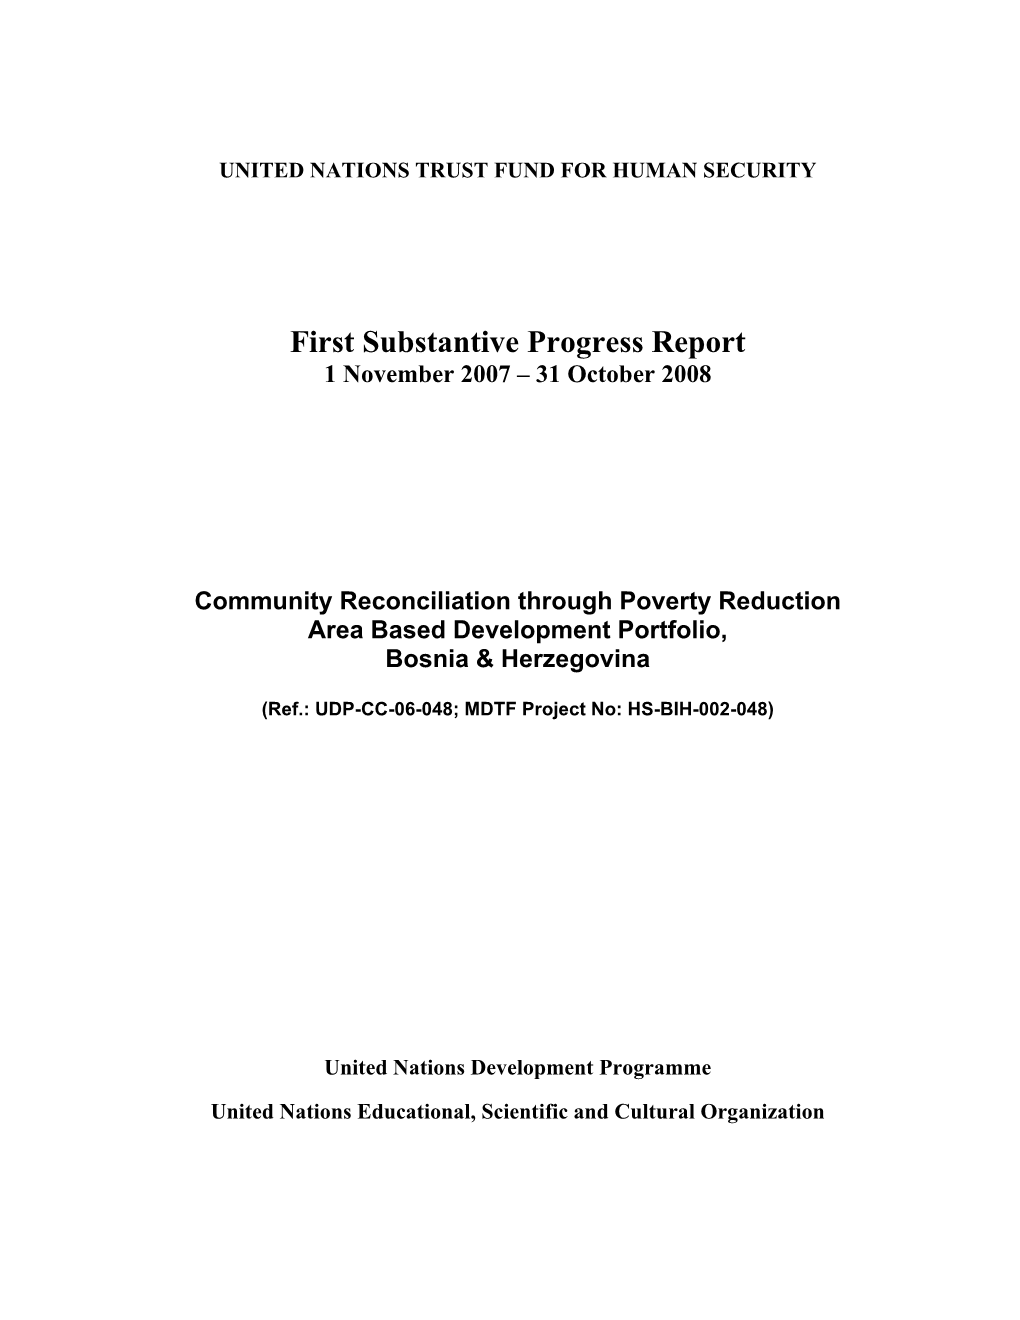 First Substantive Progress Report 1 November 2007 – 31 October 2008